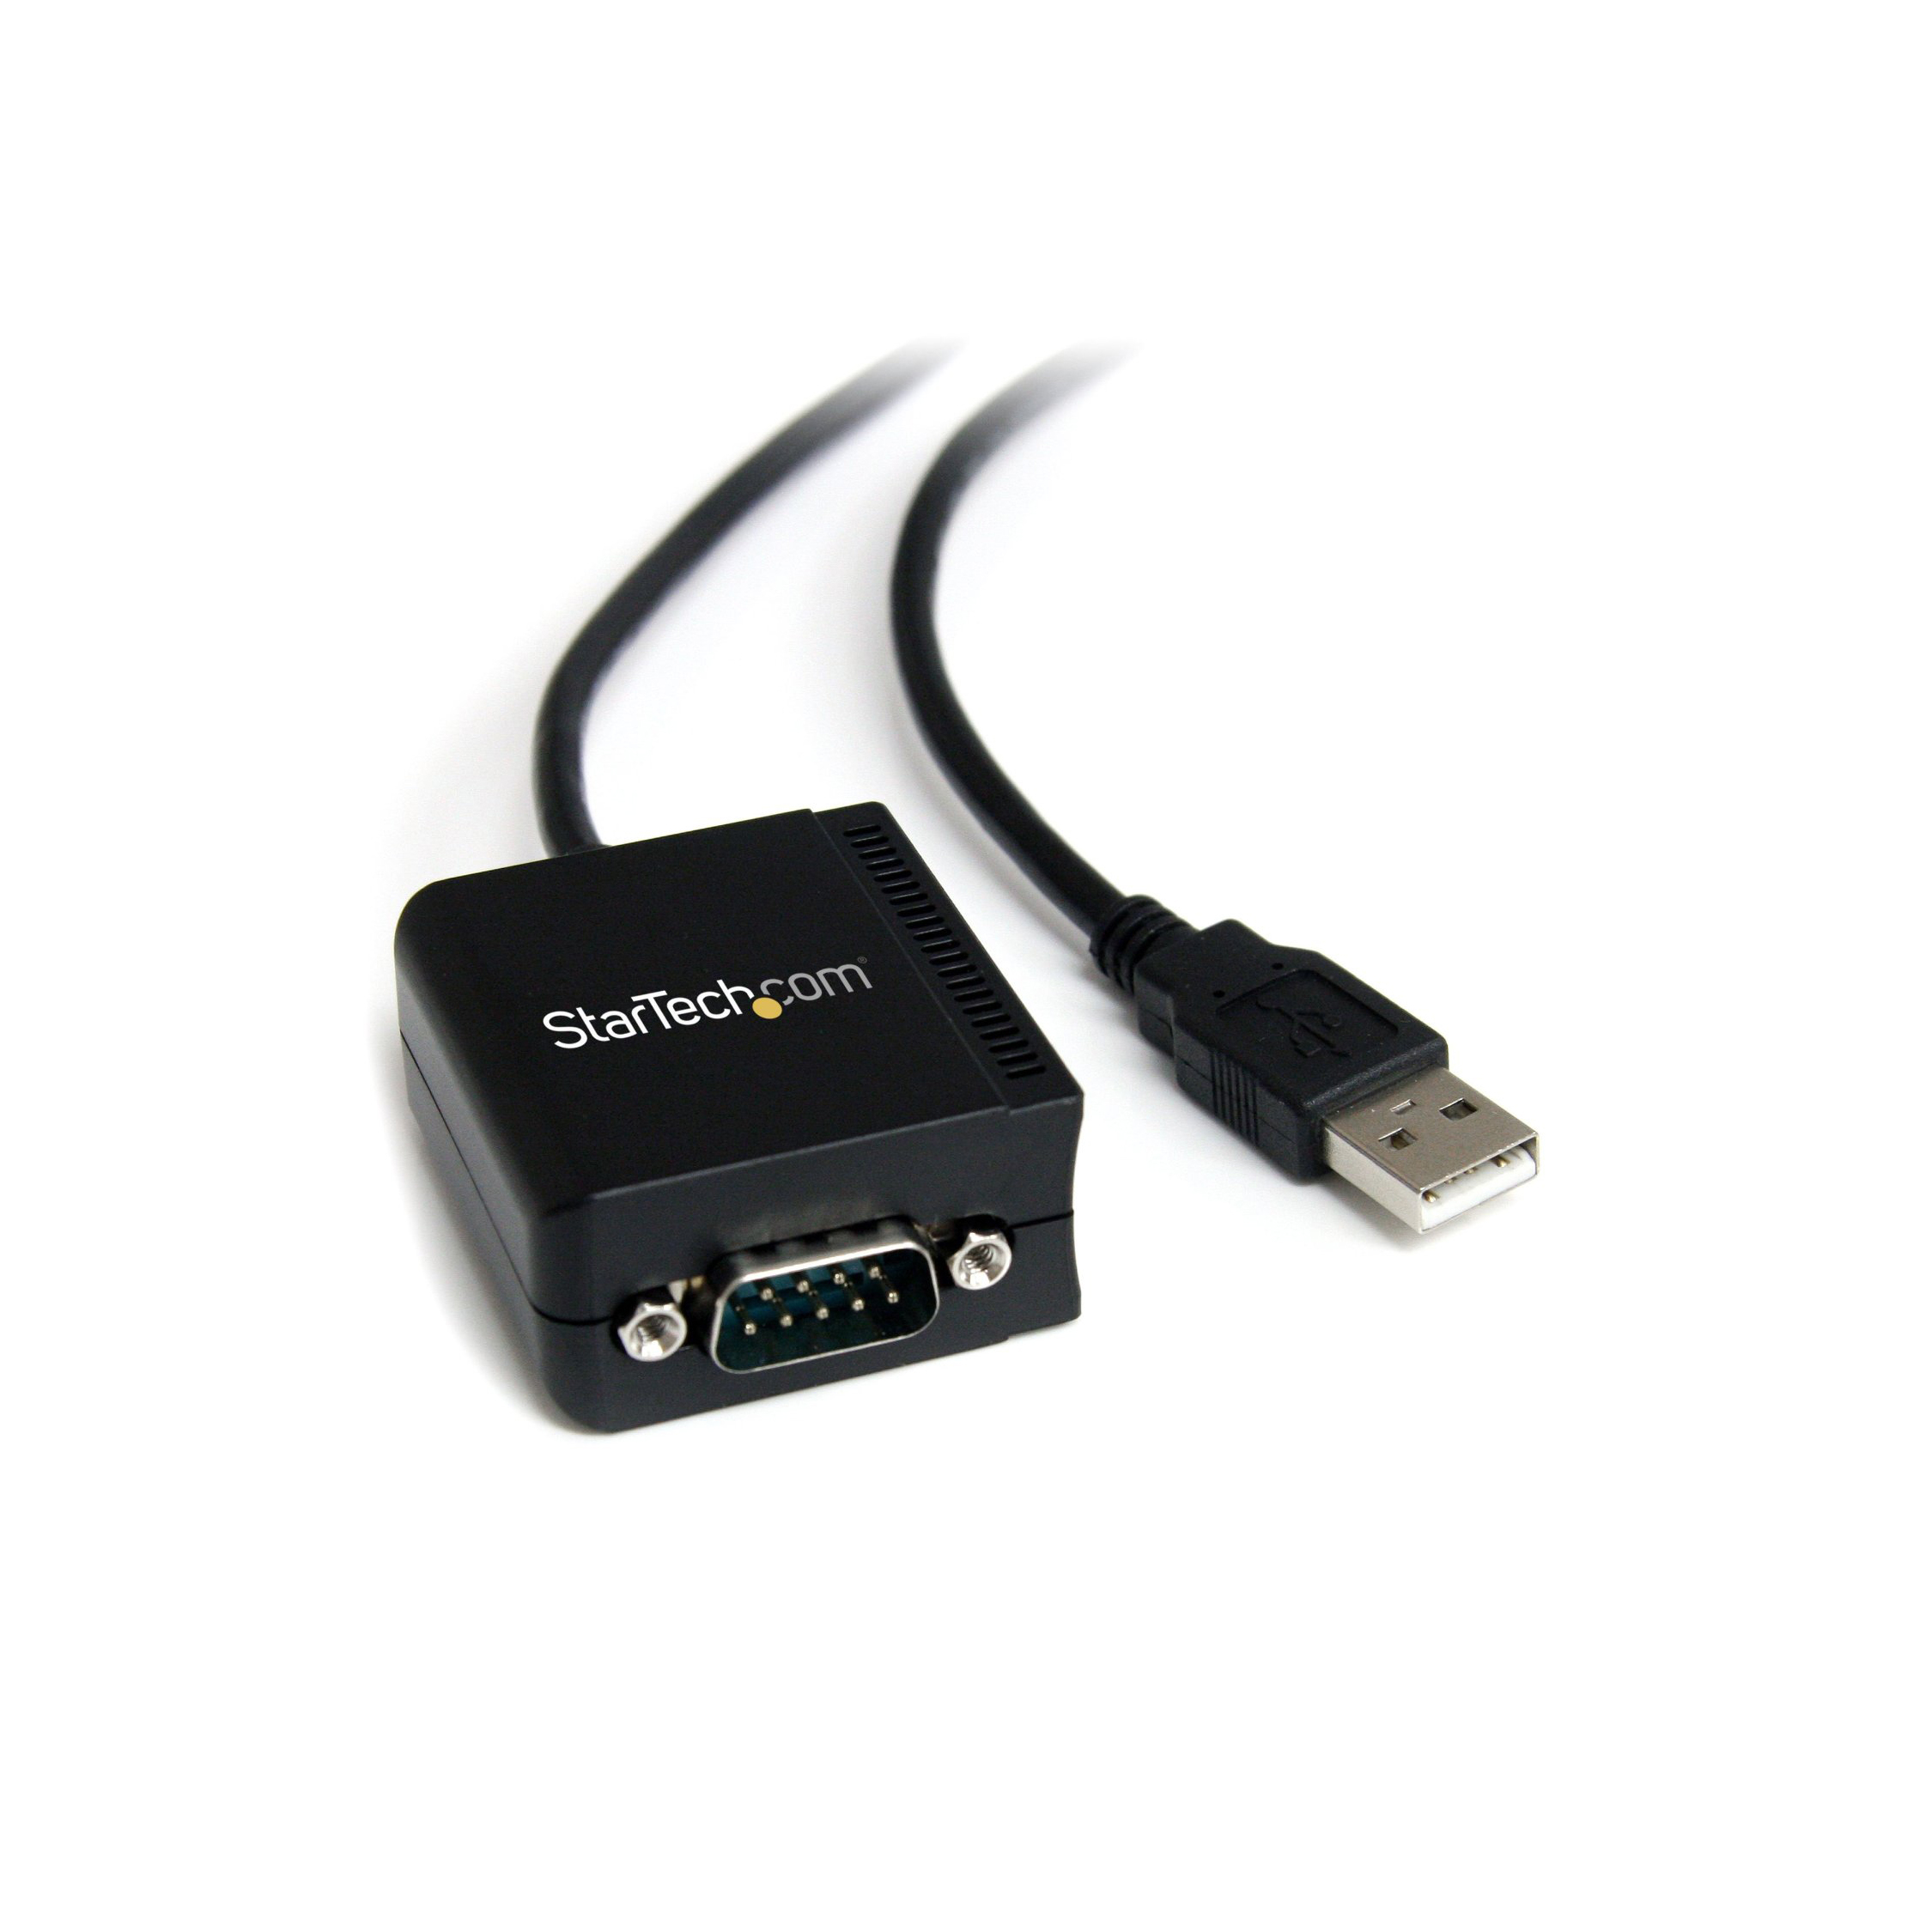 USB-A Serial Adapter - Single Port with COM | Advantage Software